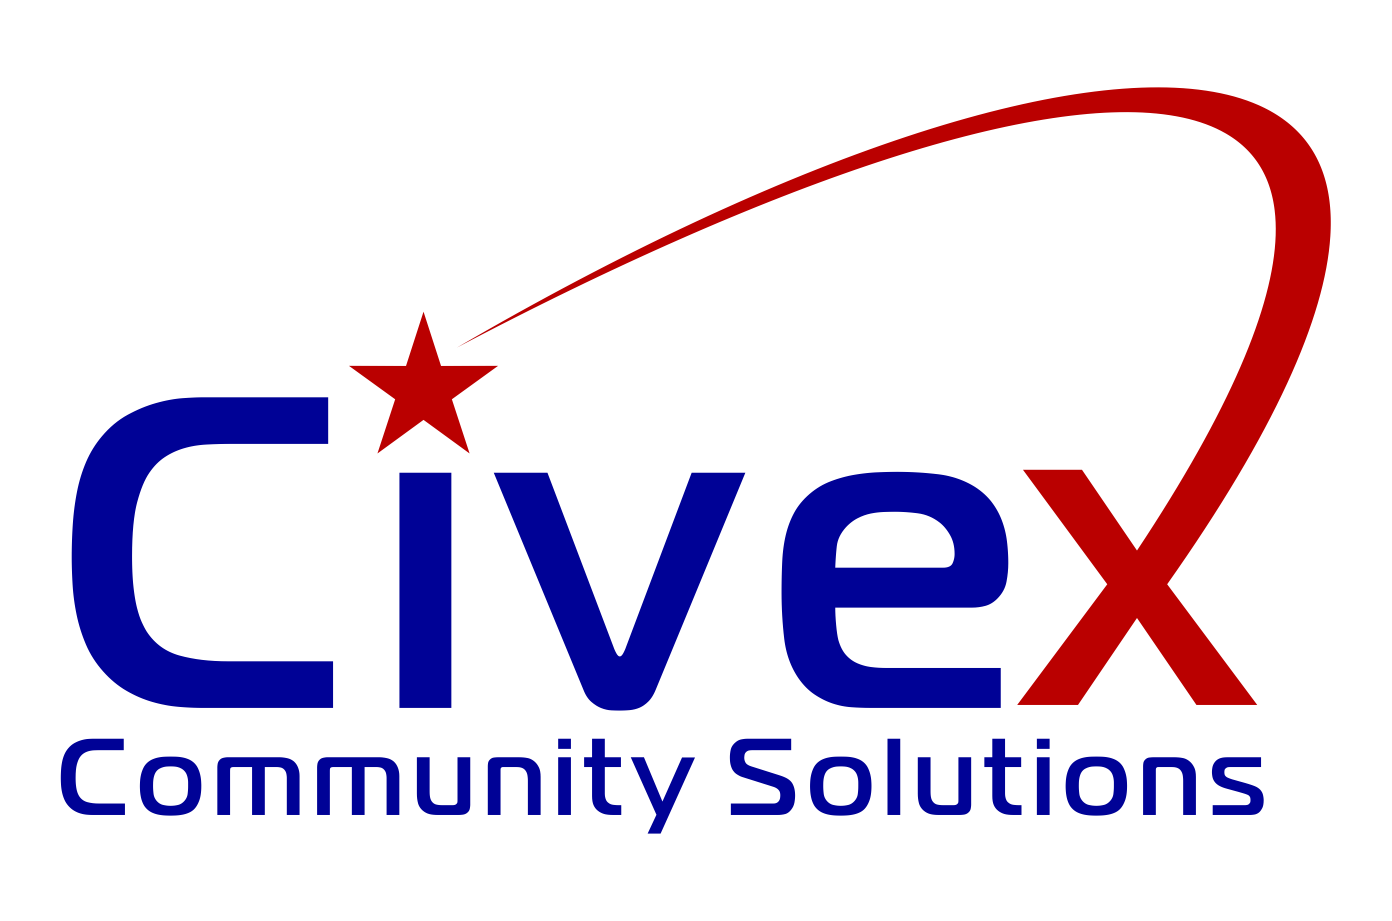 Civex+logo.png